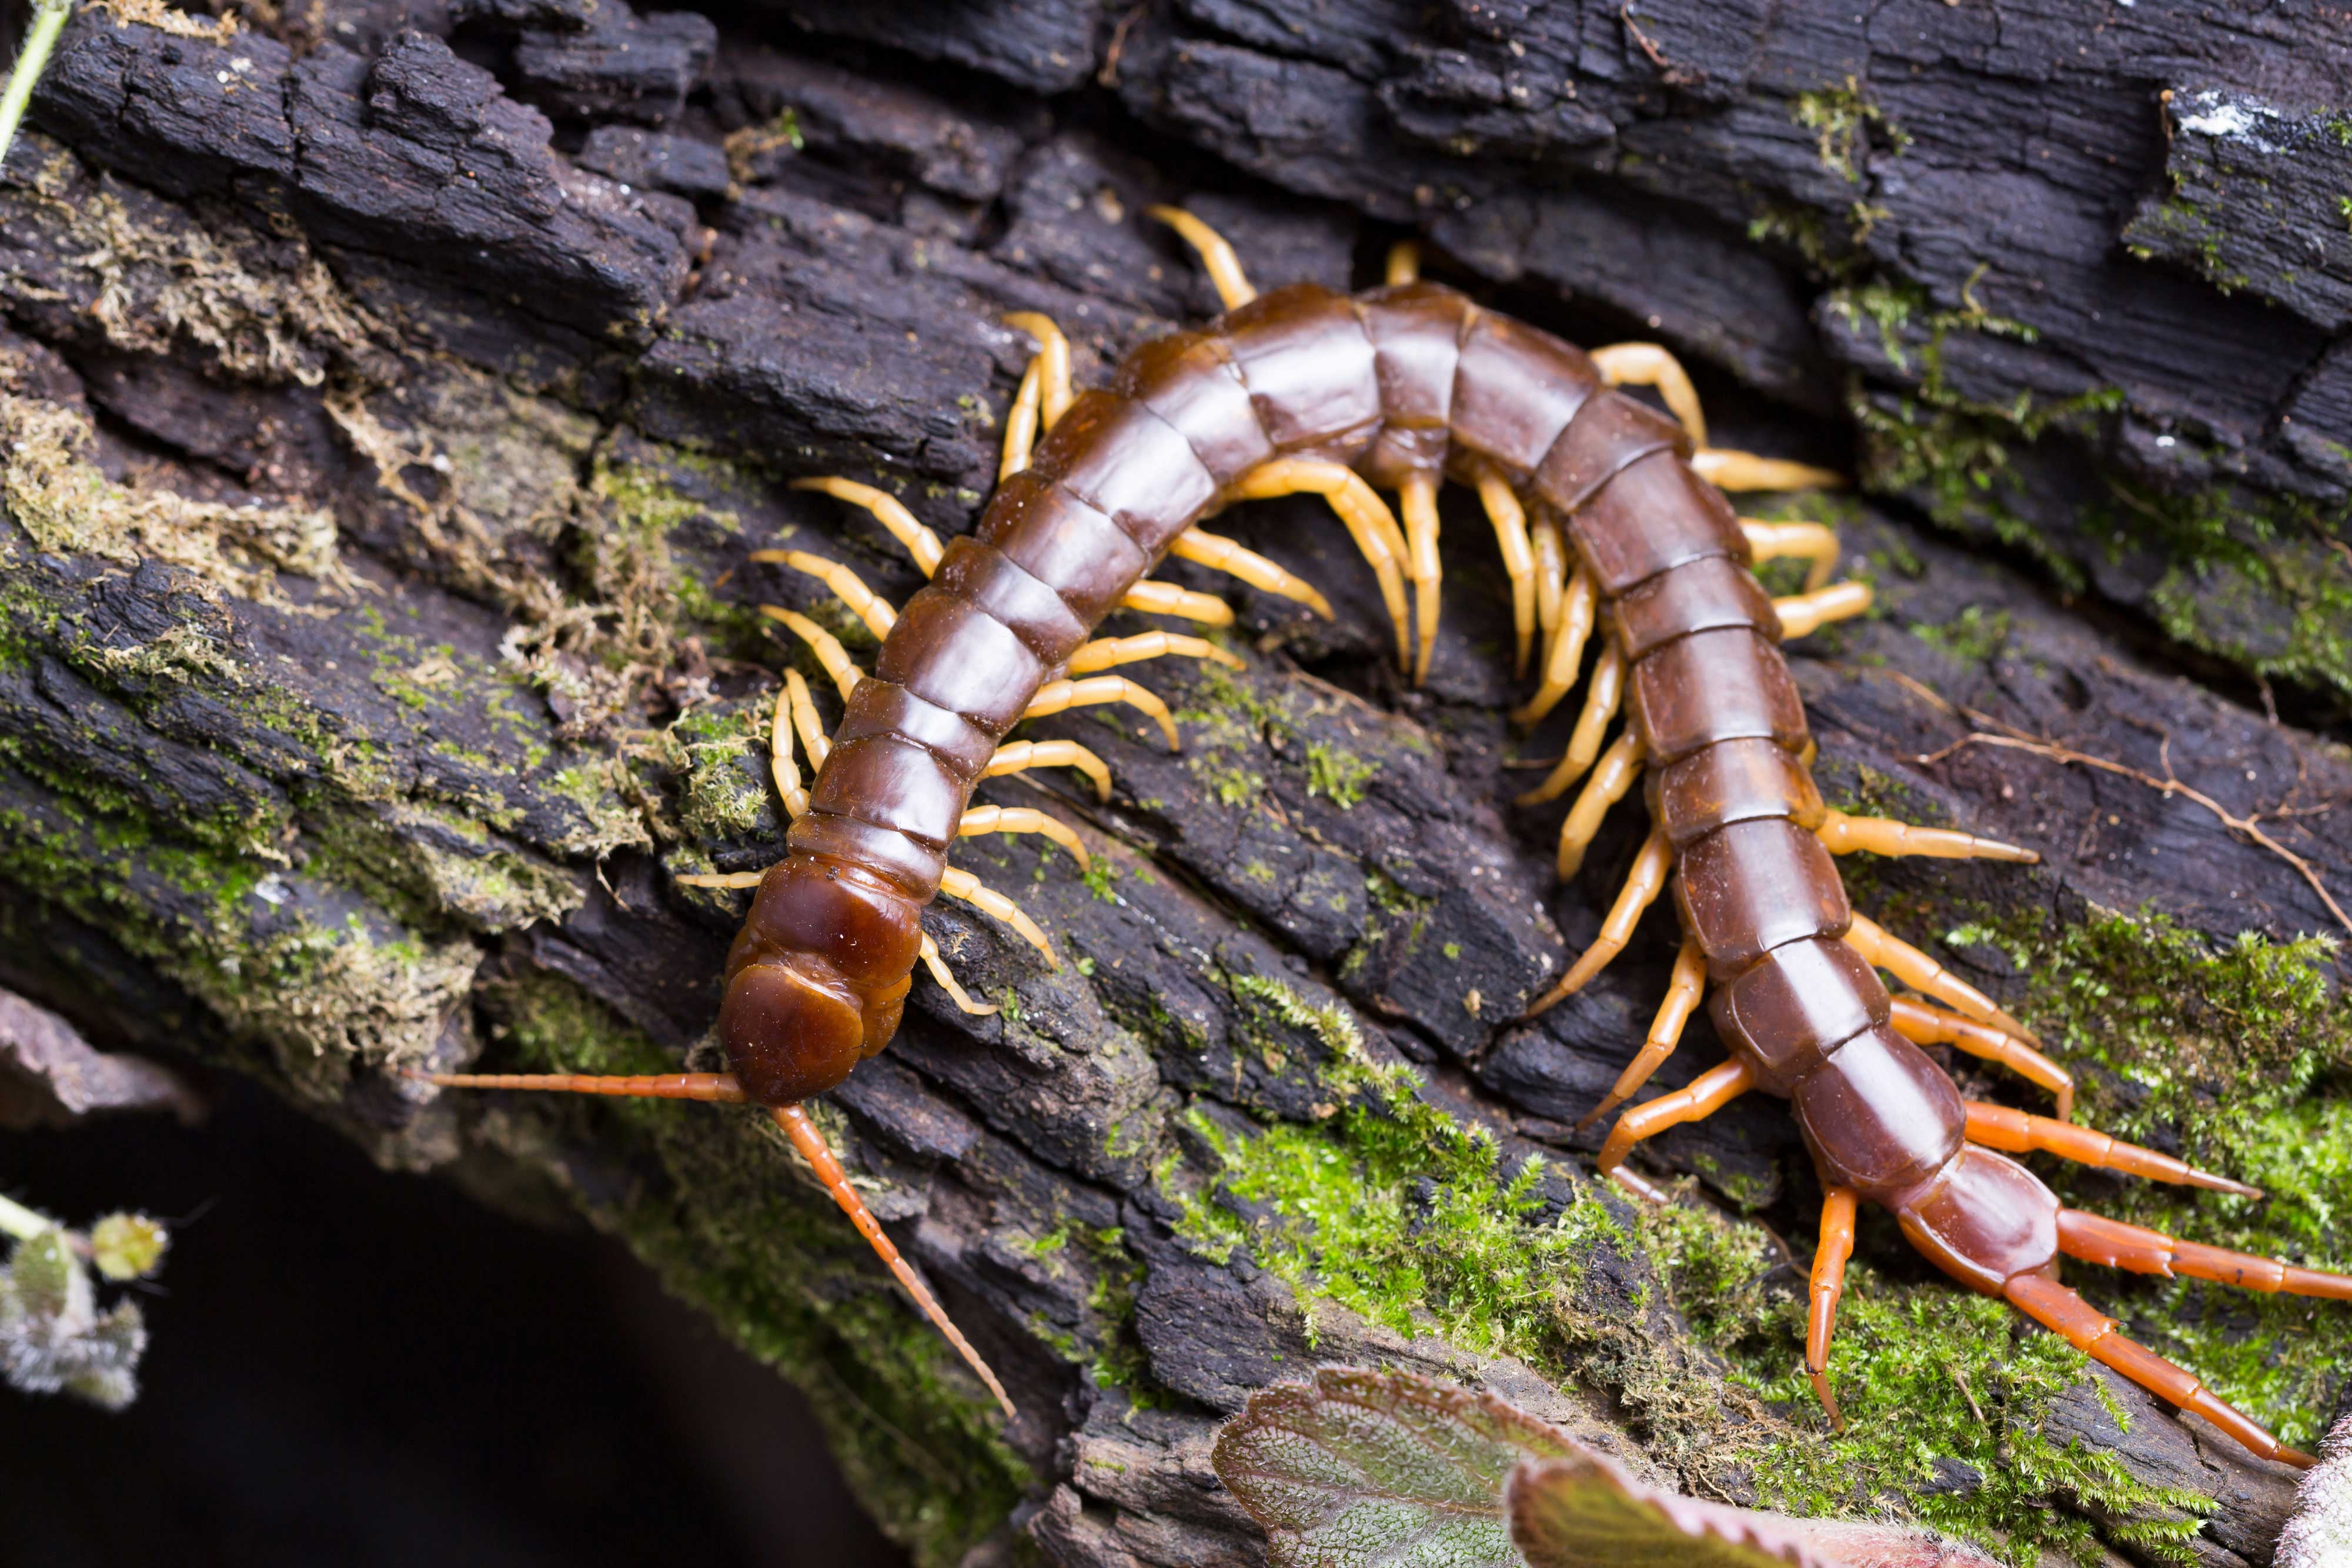 A centipede on tree bark.